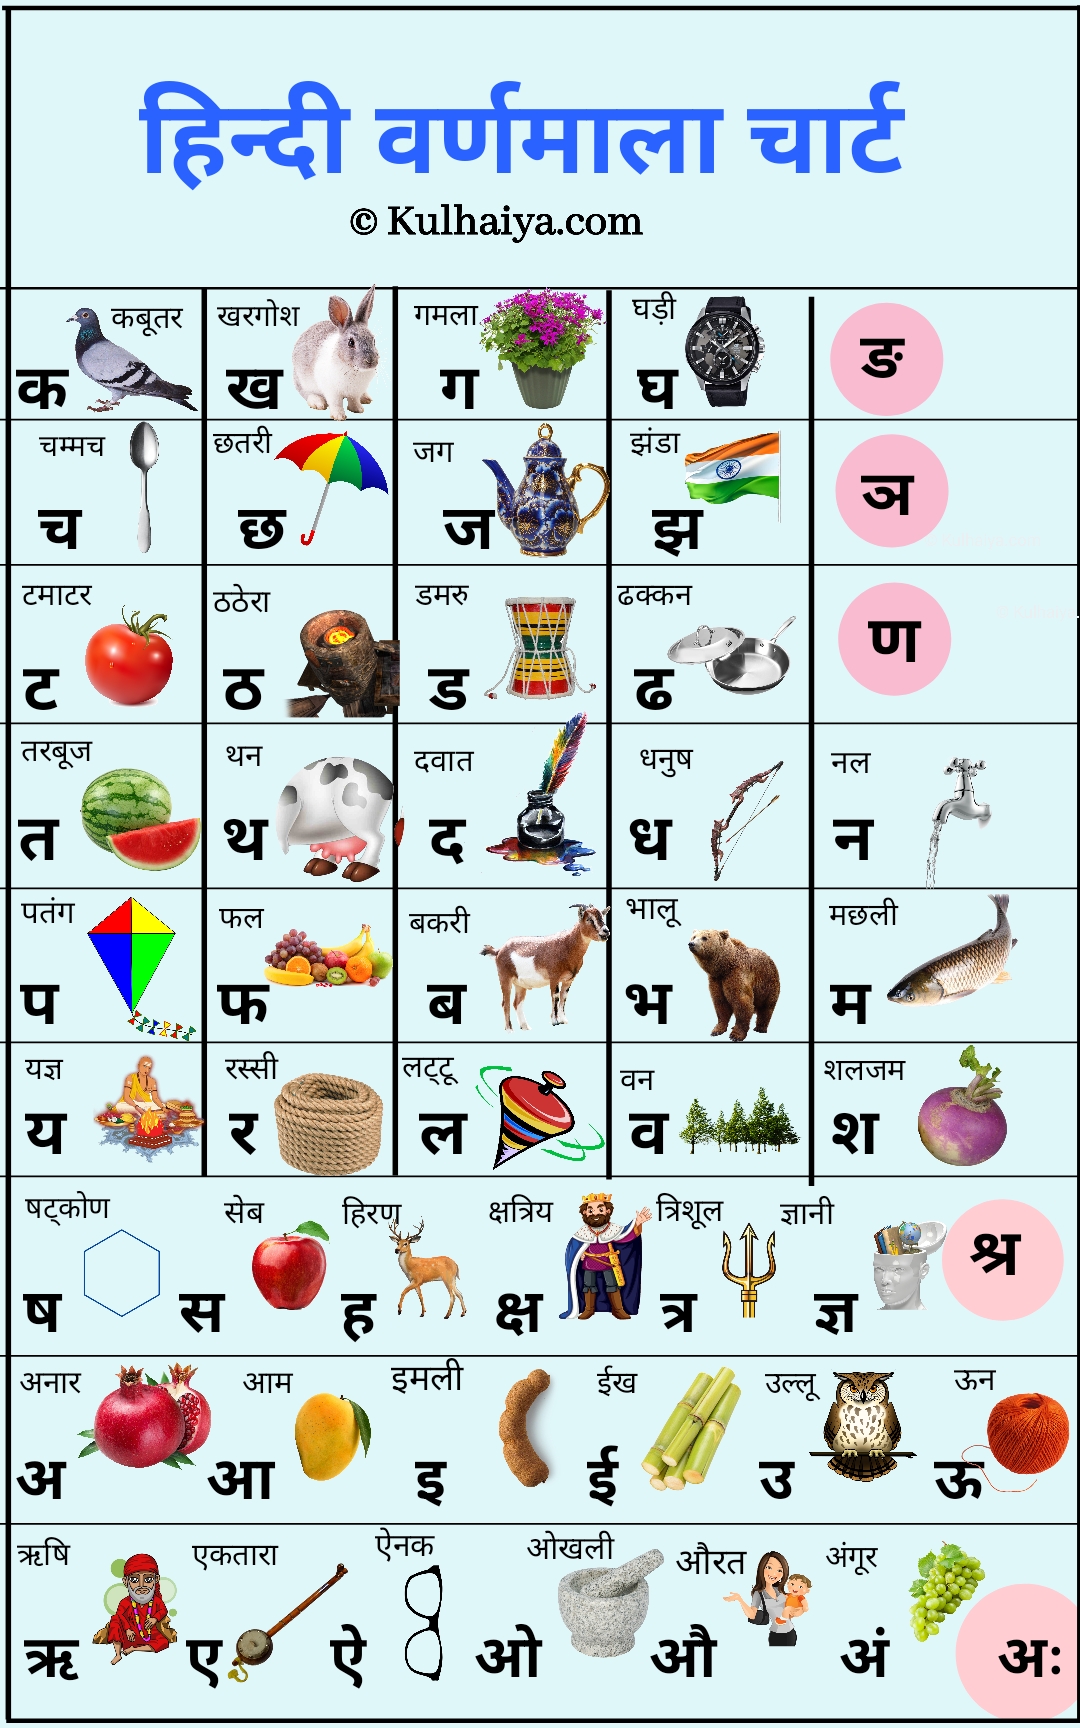 Alphabets In Hindi: वर्ण, स्वर, व्यंजन, उच्चारण, बारहखड़ी लेखन